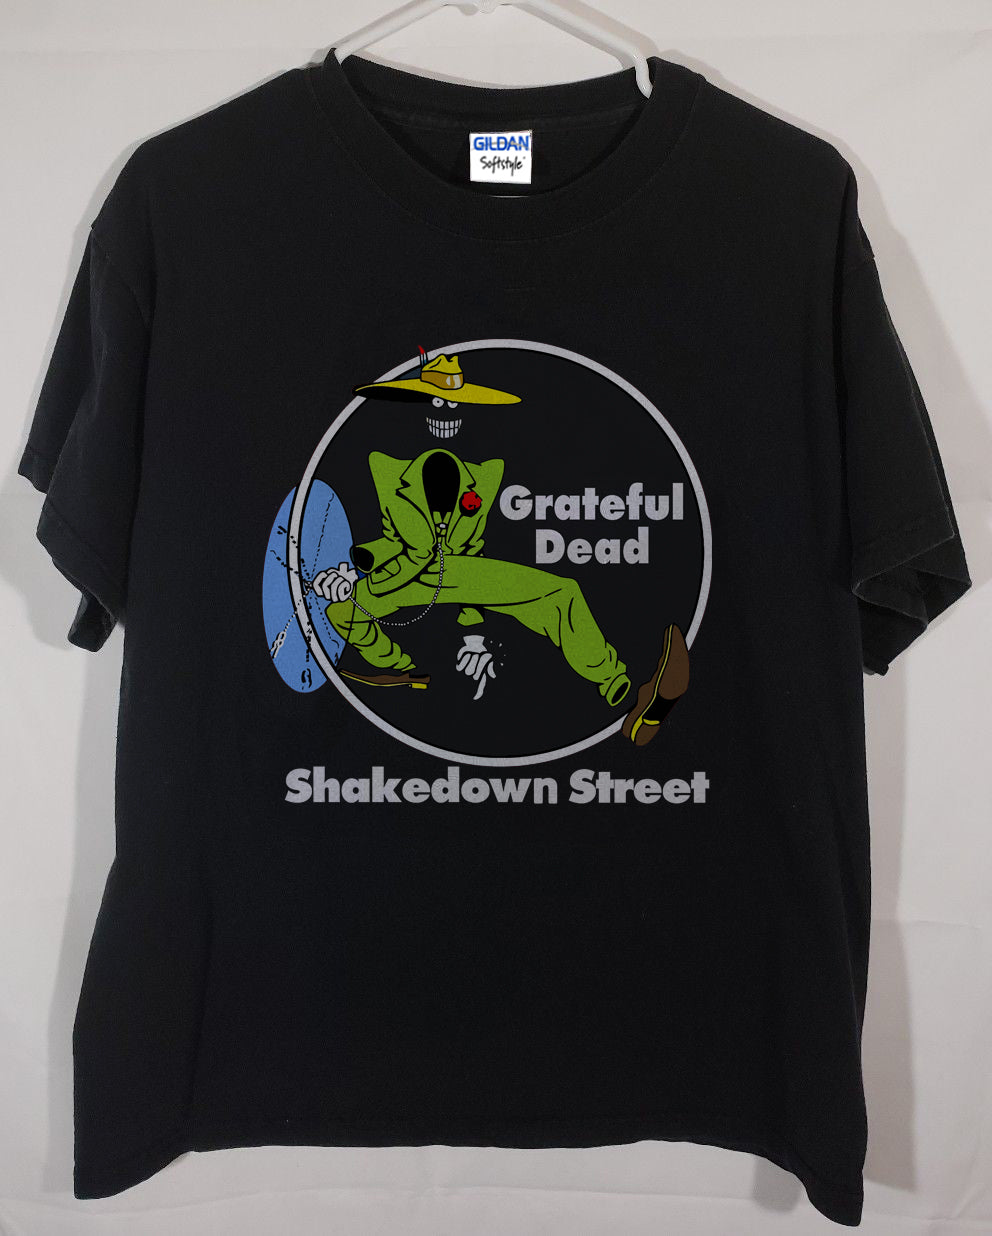 Vintage 1978 Grateful Dead Shakedown Street T-Shirt Tee